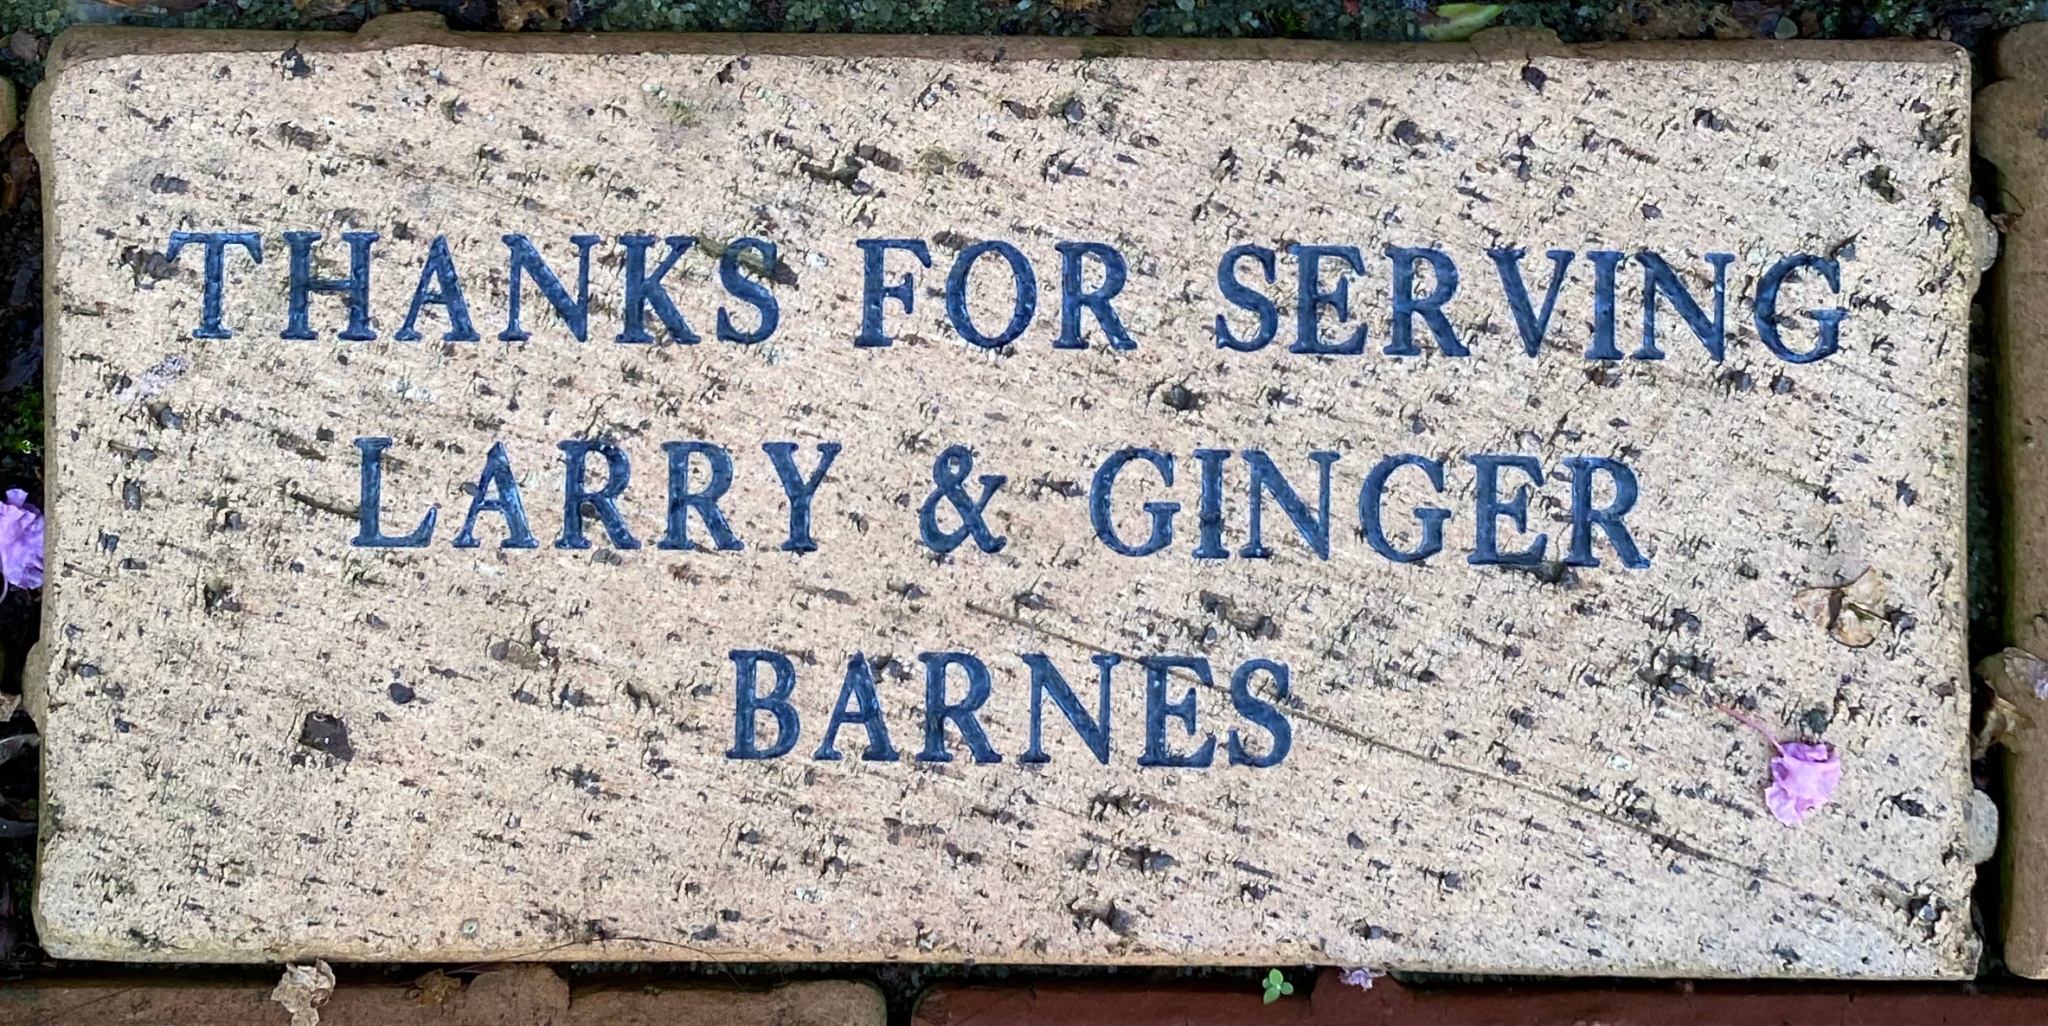 THANKS FOR SERVING LARRY & GINGER BARNES